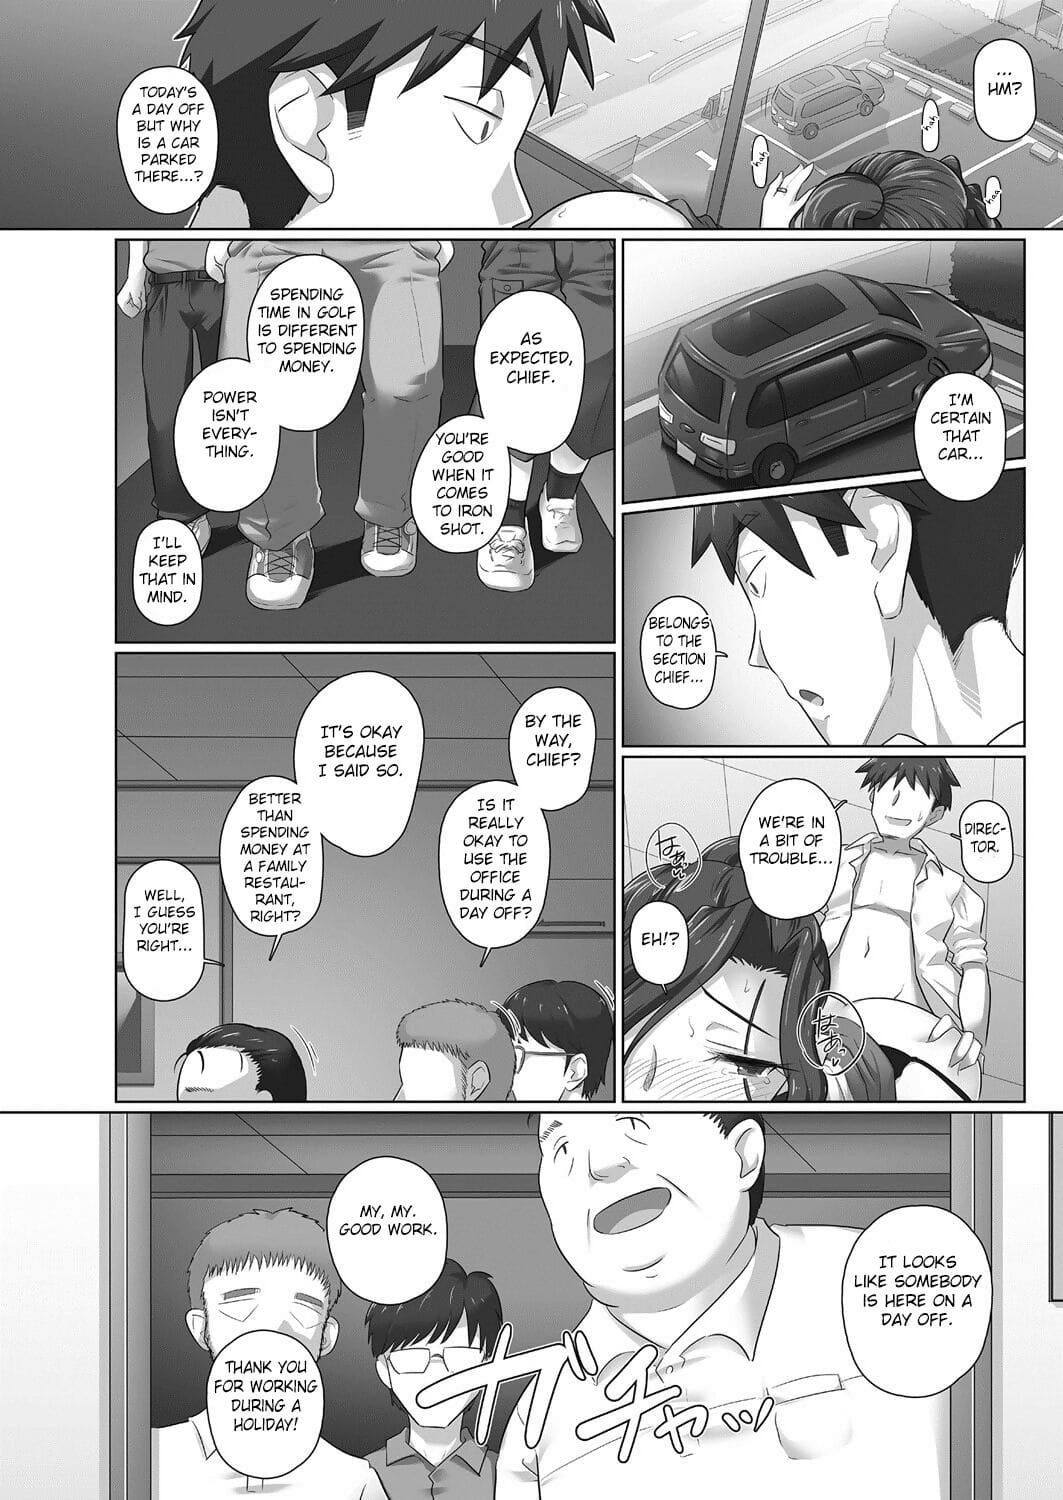 Hitoduma buchou kasumi Series - part 2 page 1